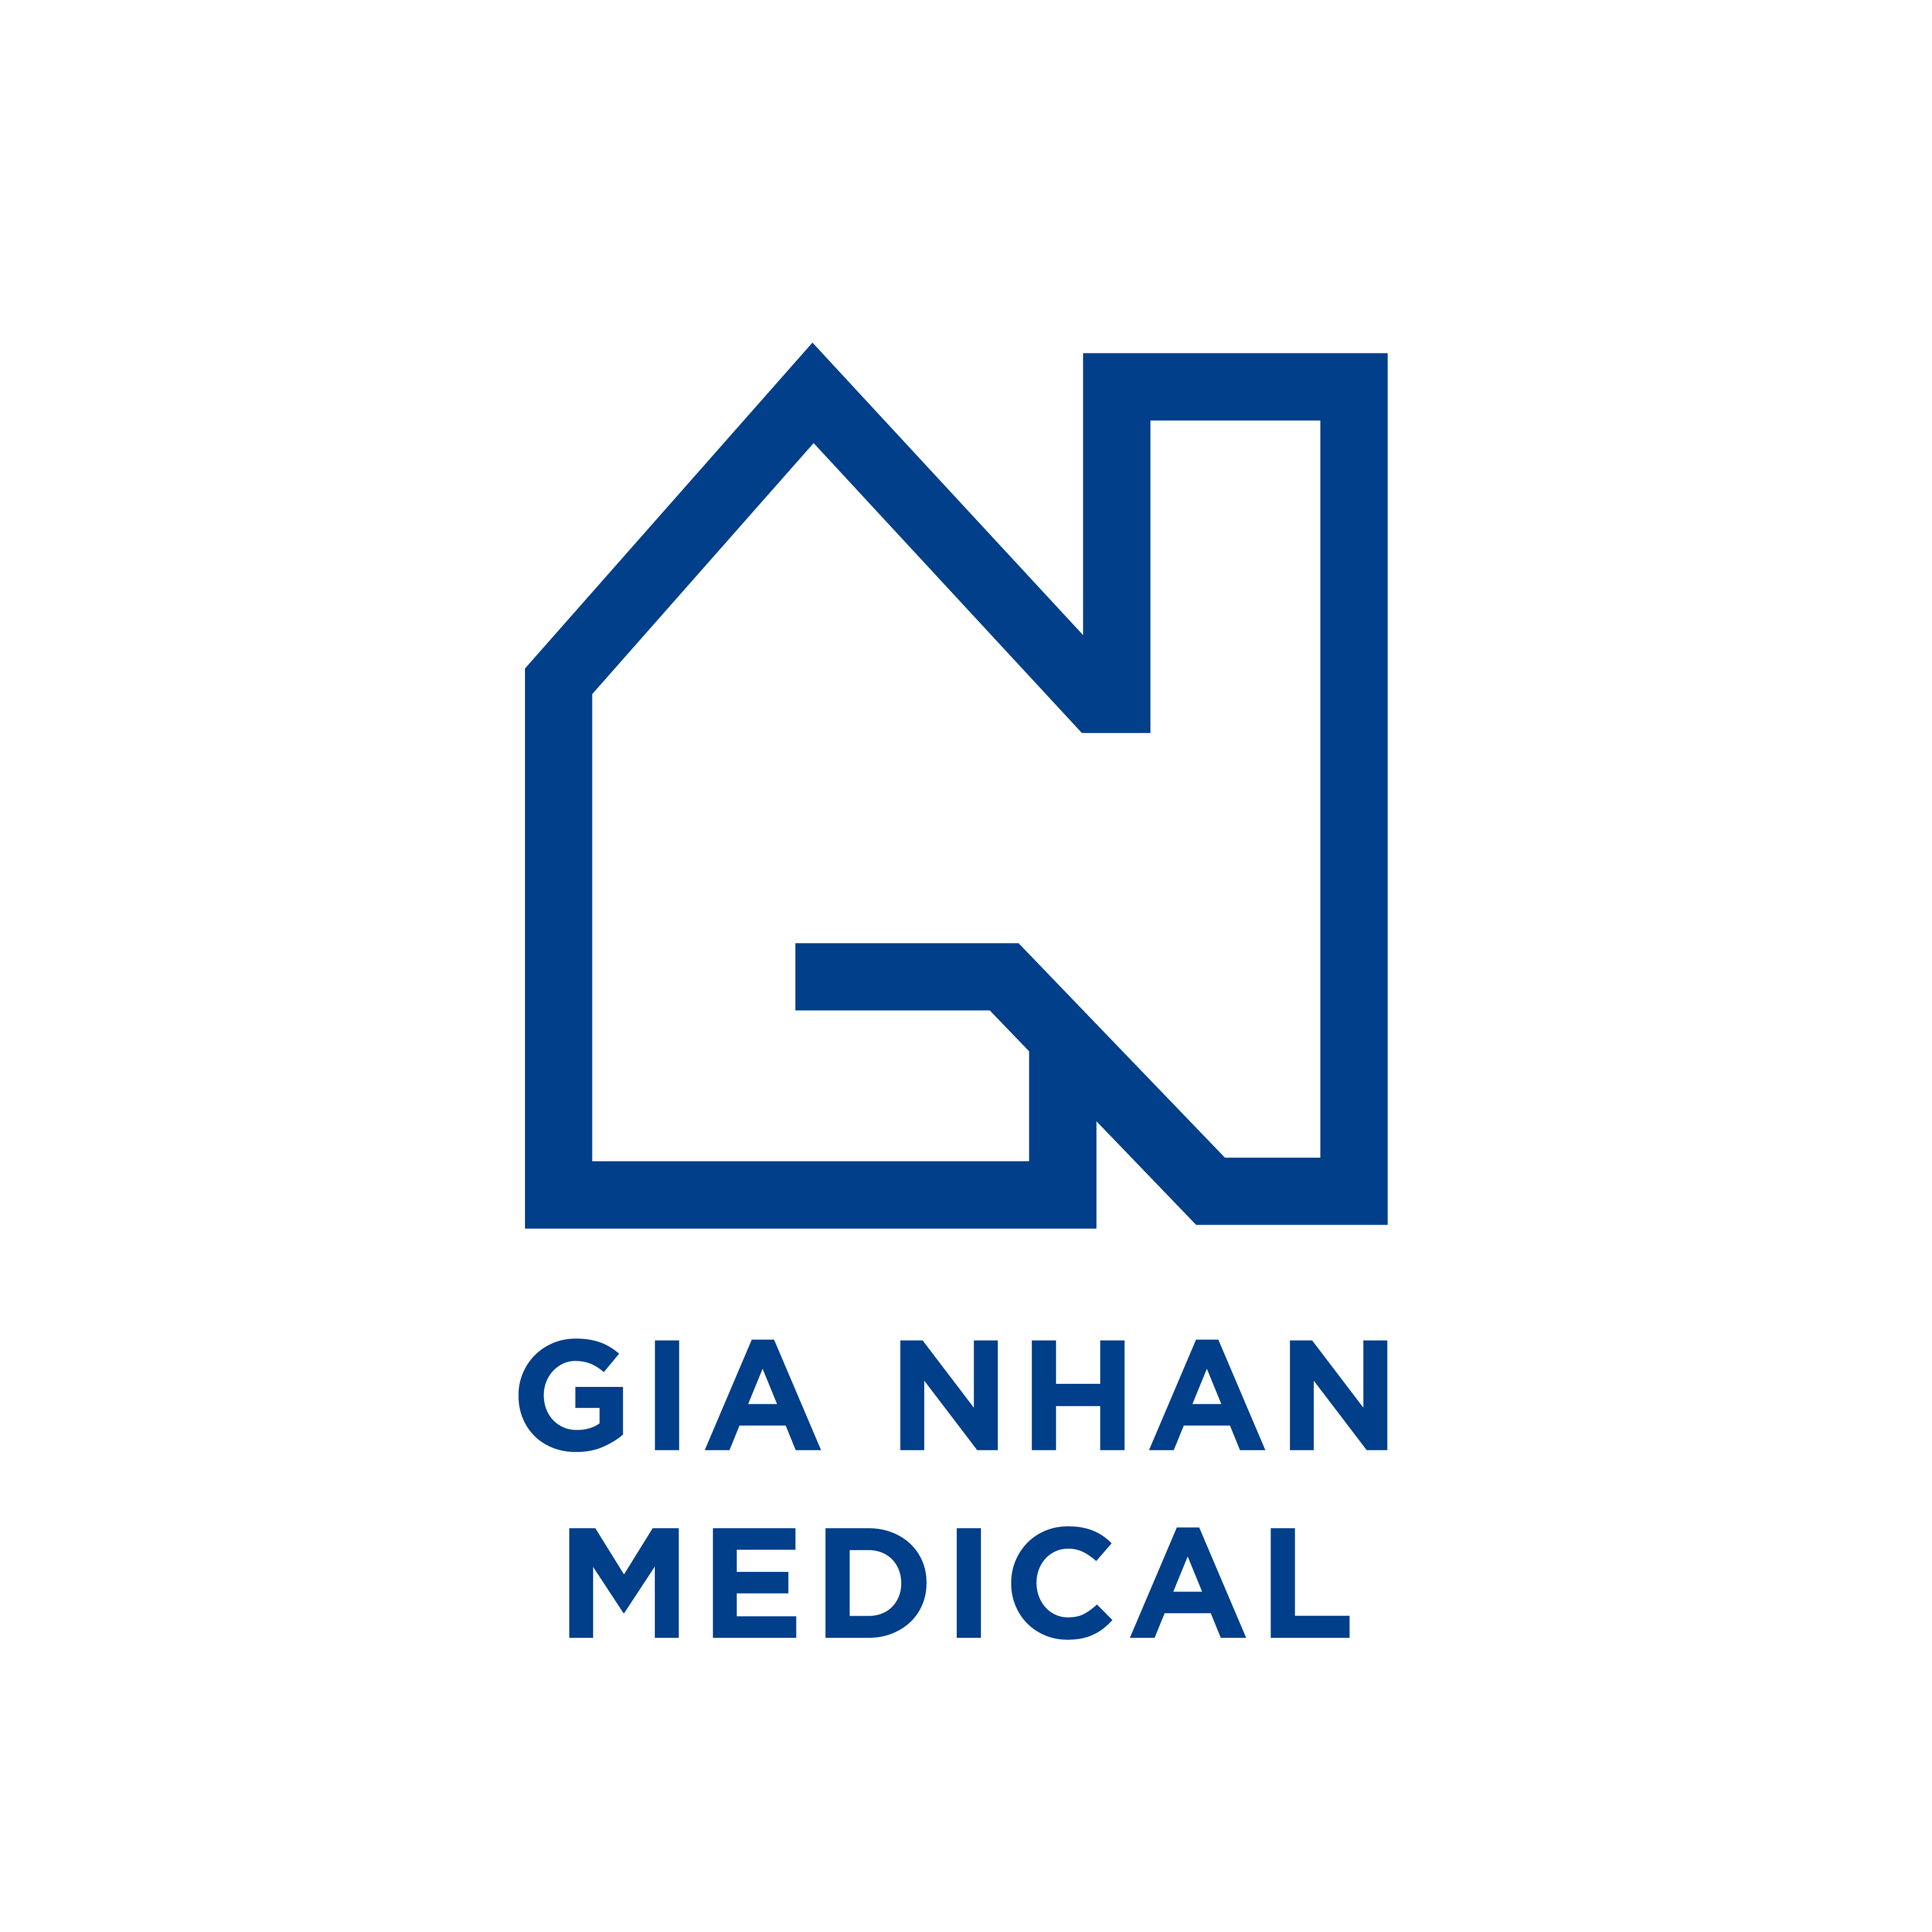 GiaNhan Medical